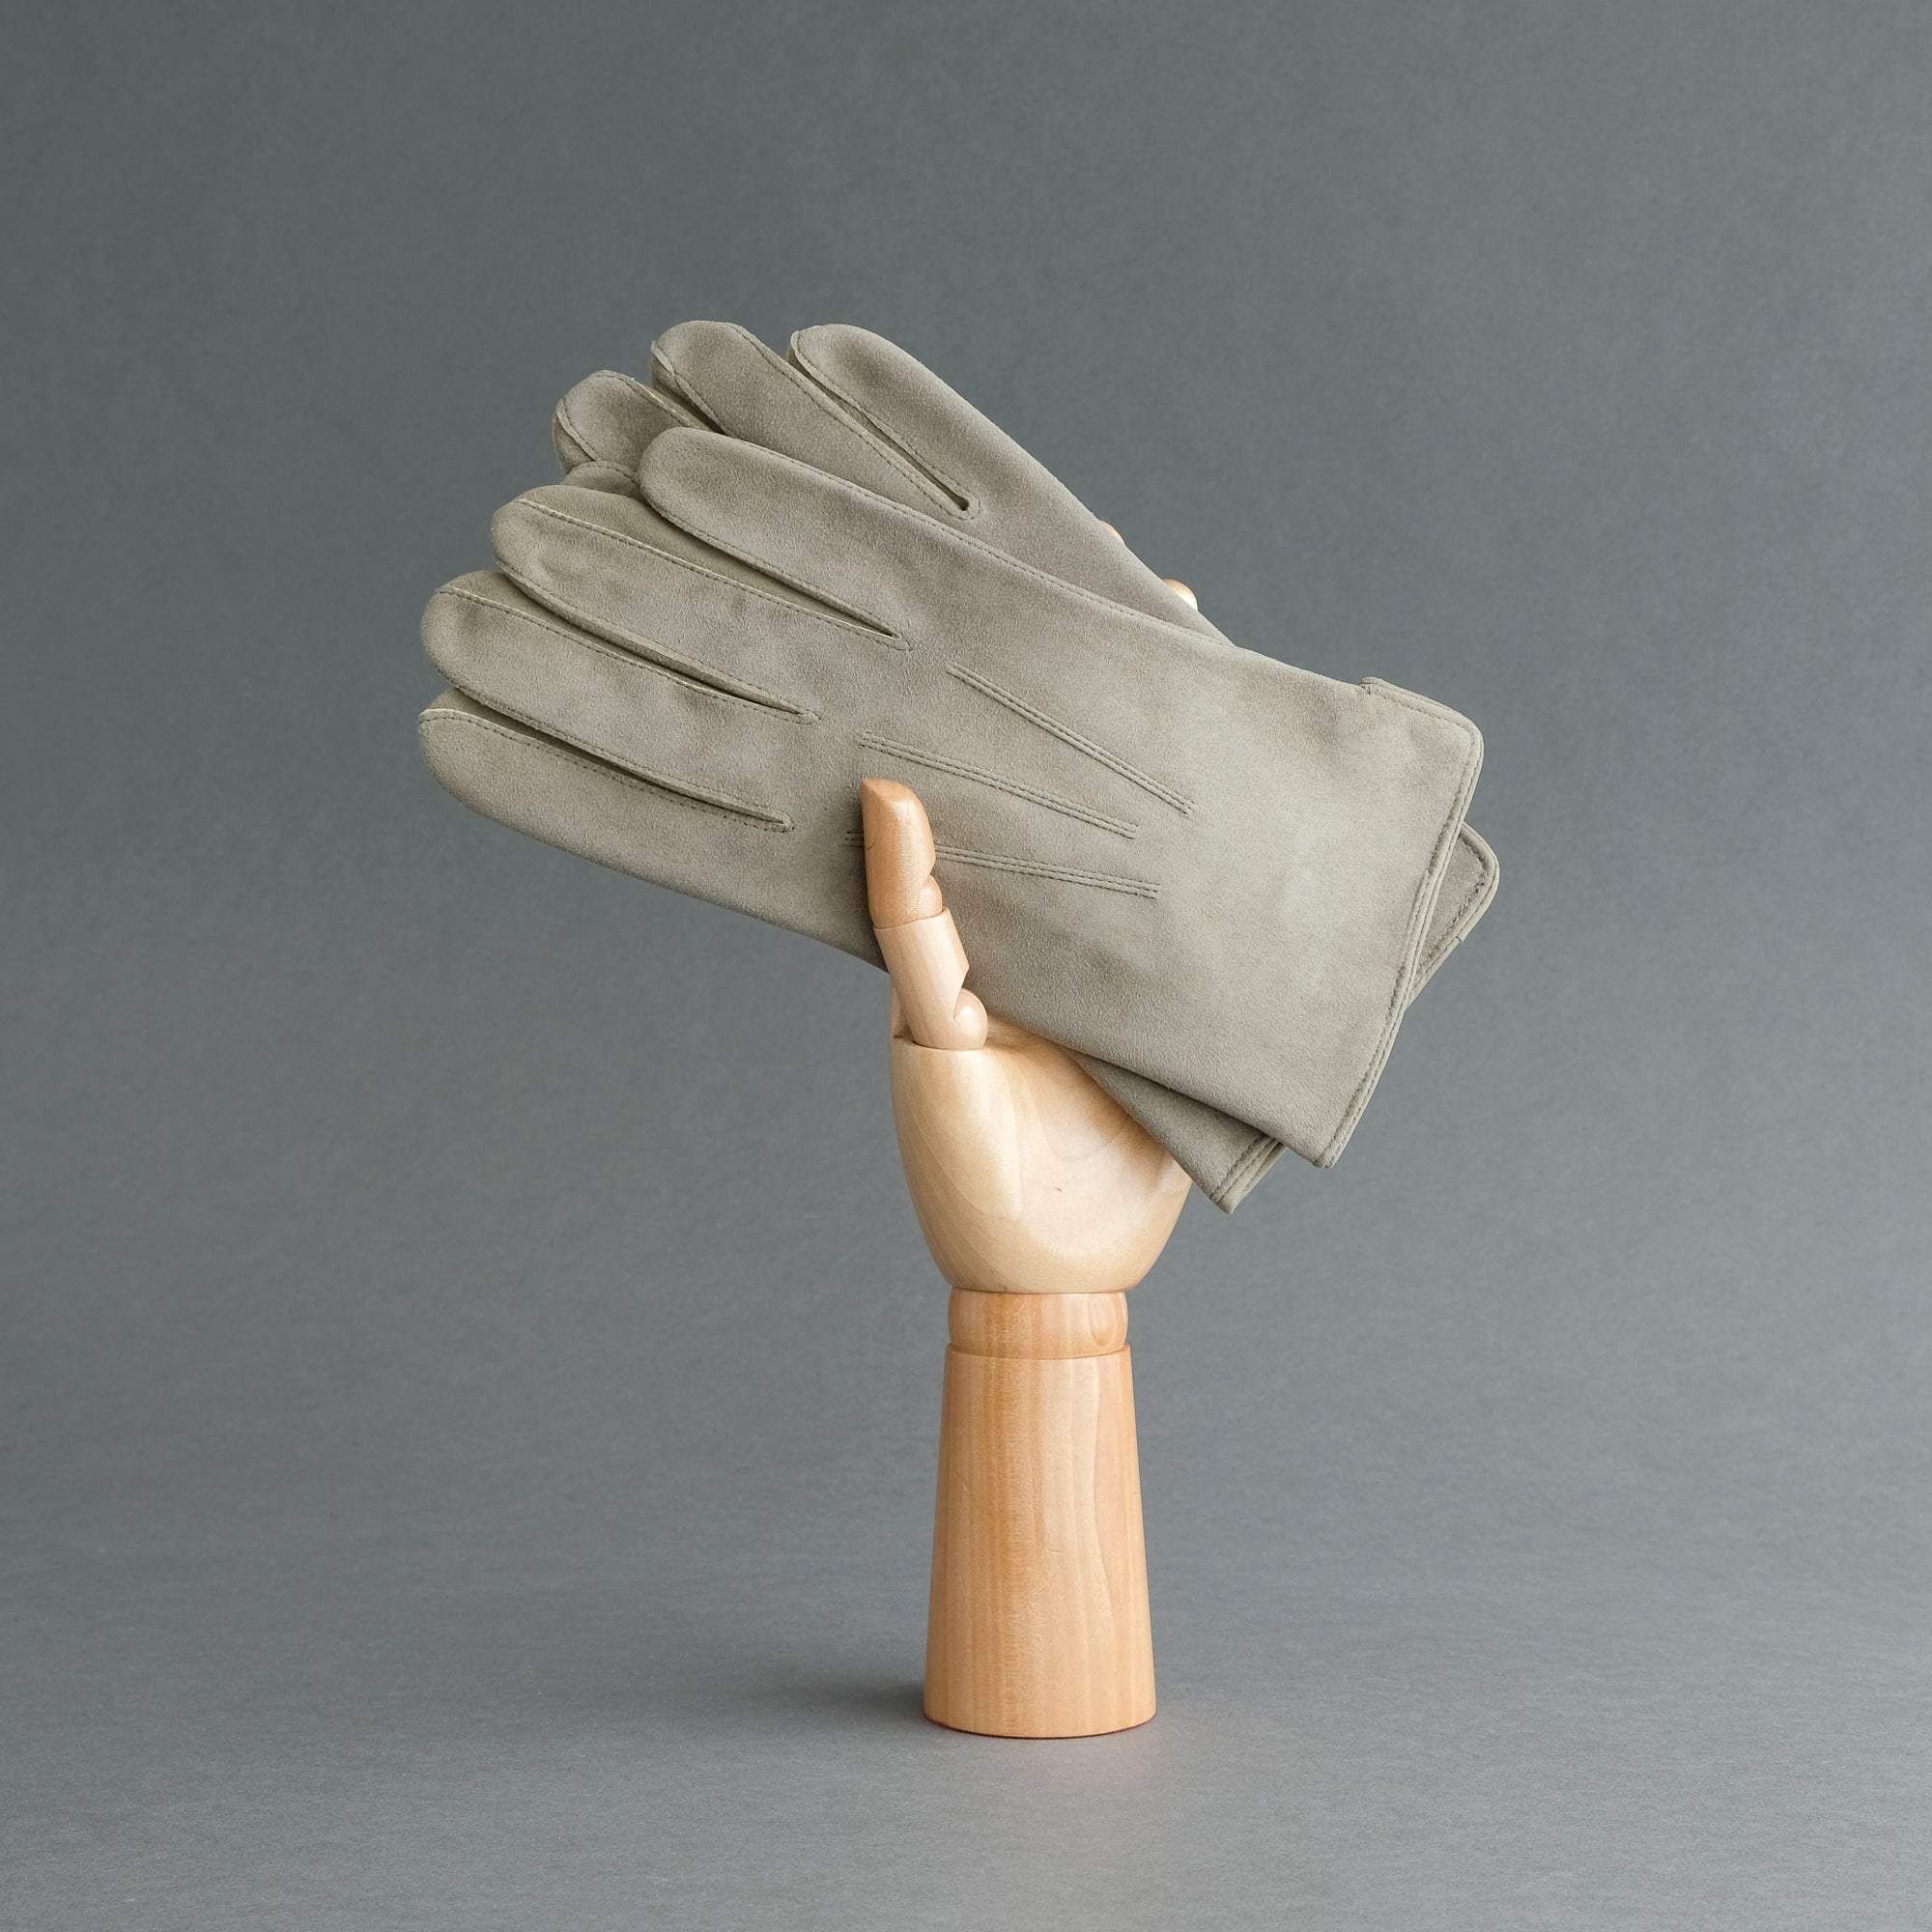 Gentlemen's Unlined Gloves from Grey Doeskin - TR Handschuhe Wien - Thomas Riemer Handmade Gloves